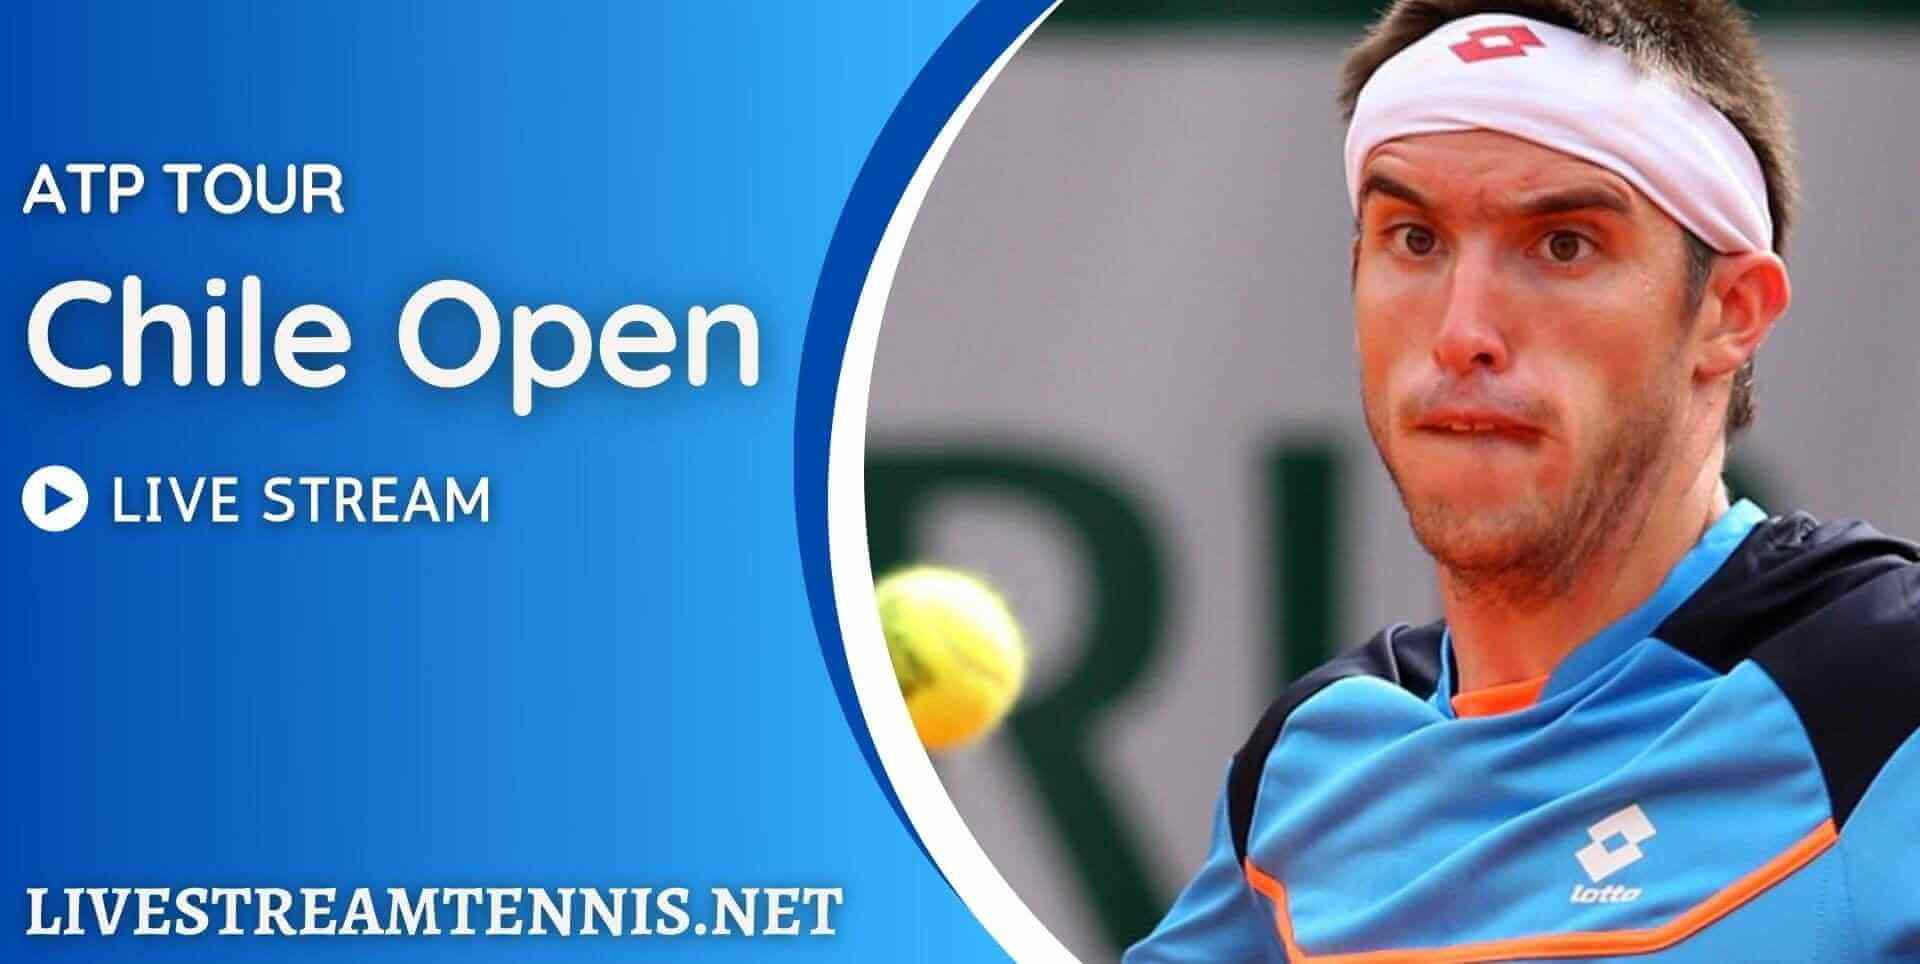 atp-chile-open-live-stream-tennis-santiago